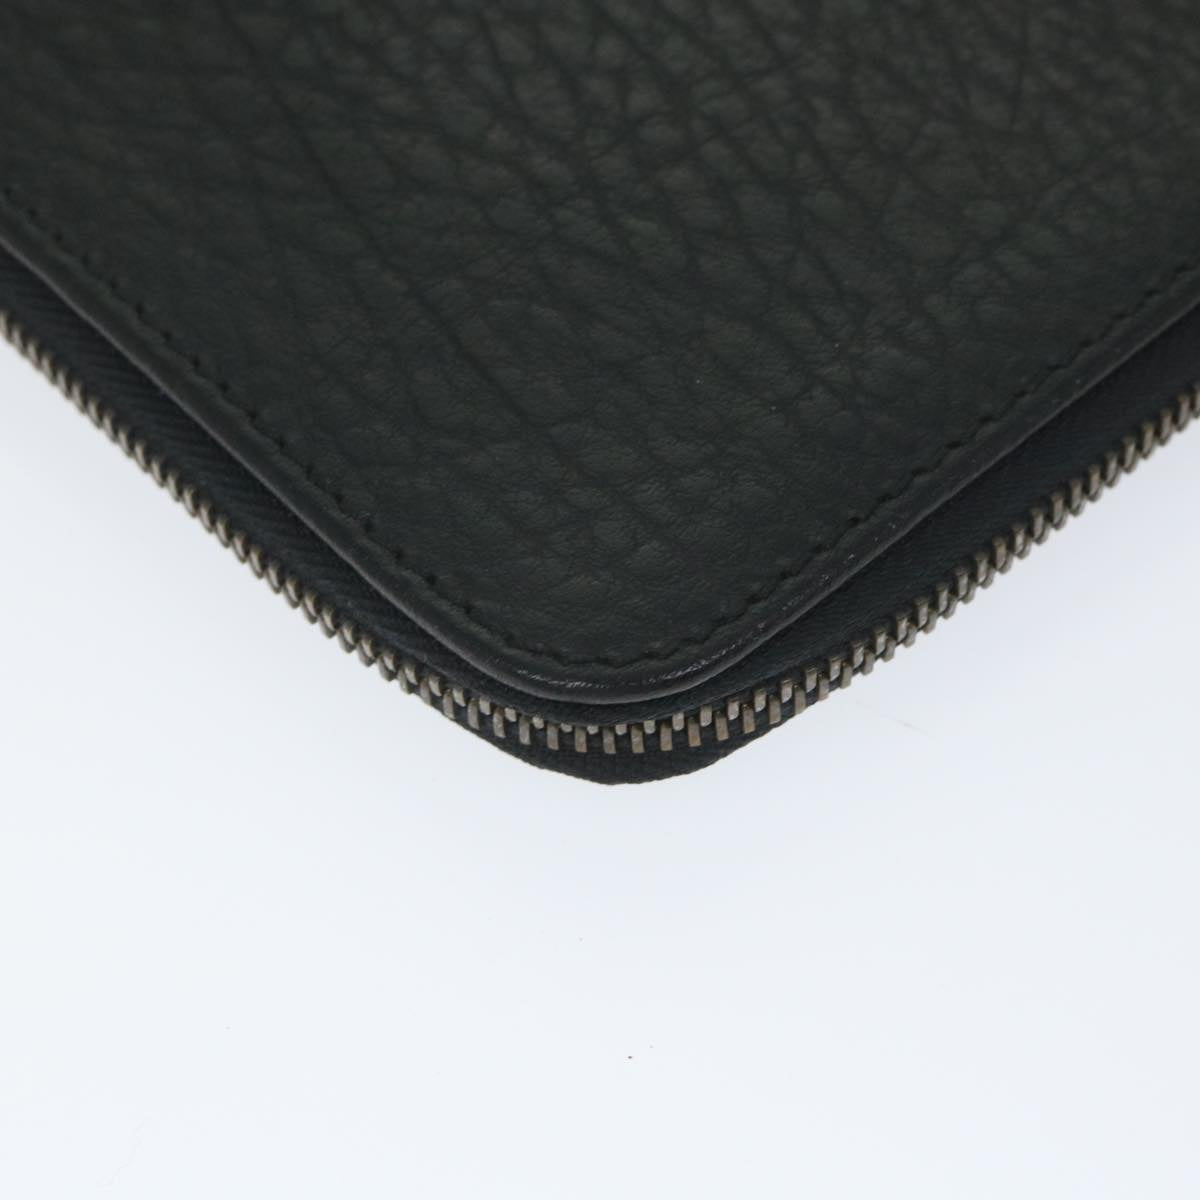 Burberrys Briefcase Leather Black Auth hk882